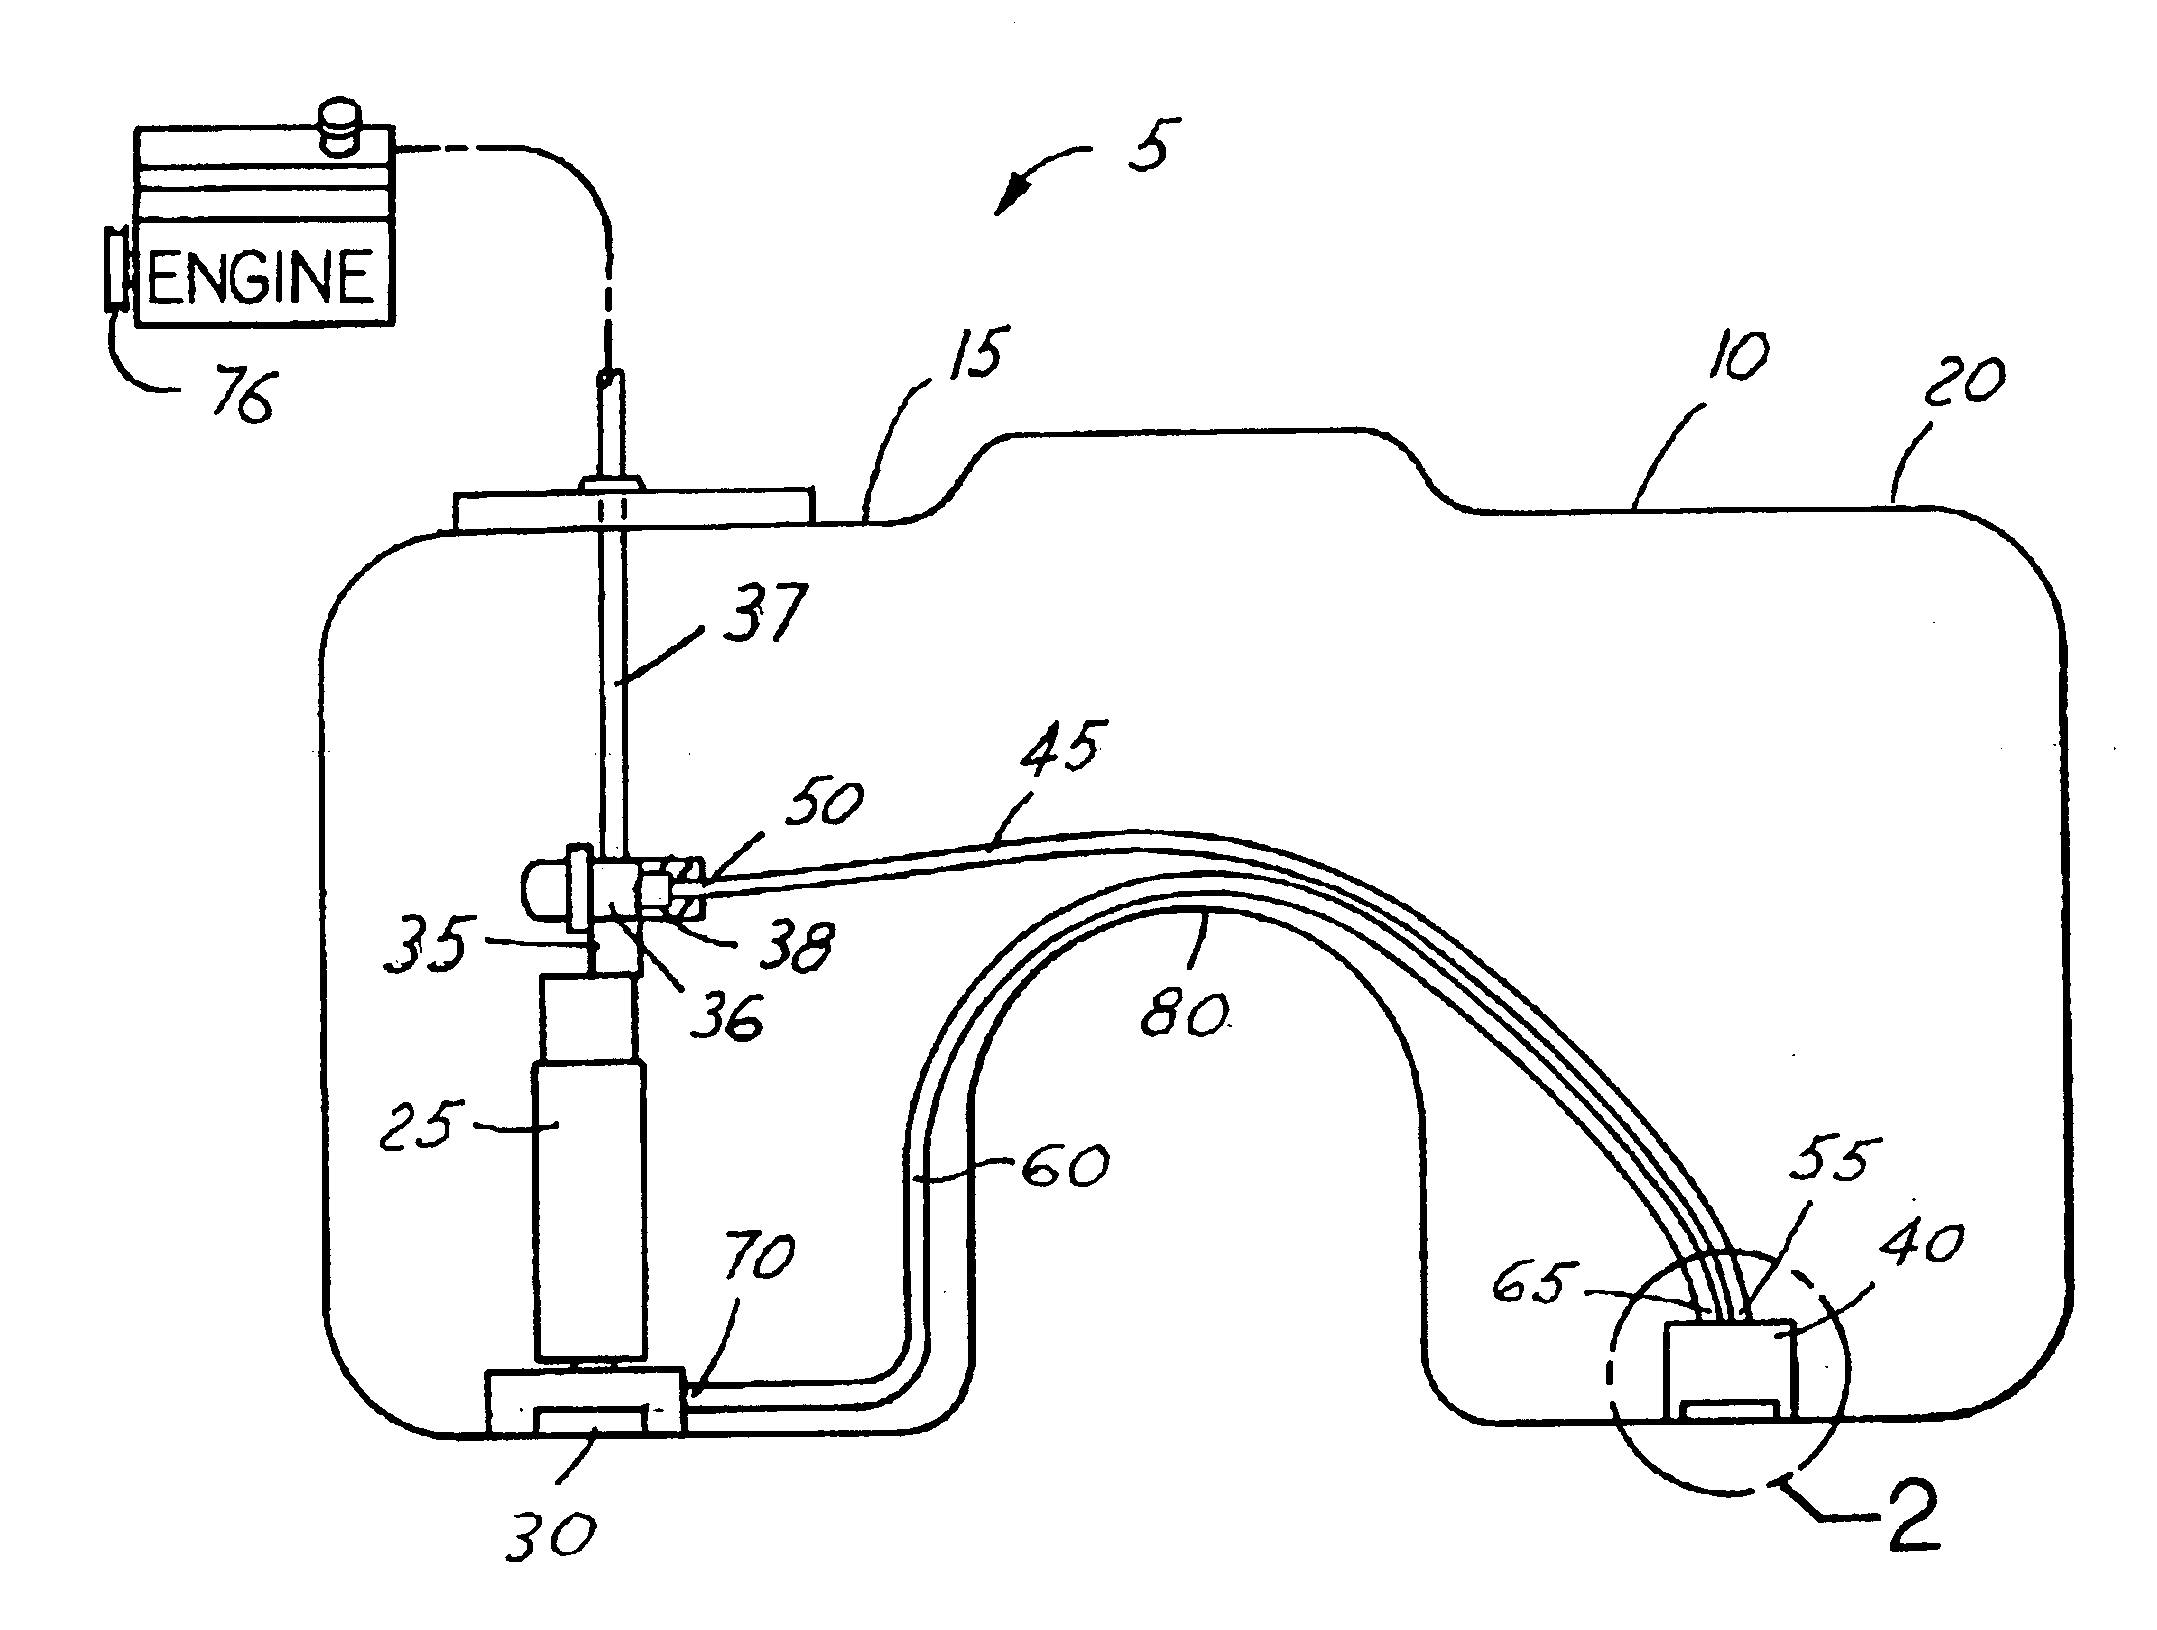 Saddle tank siphon primer